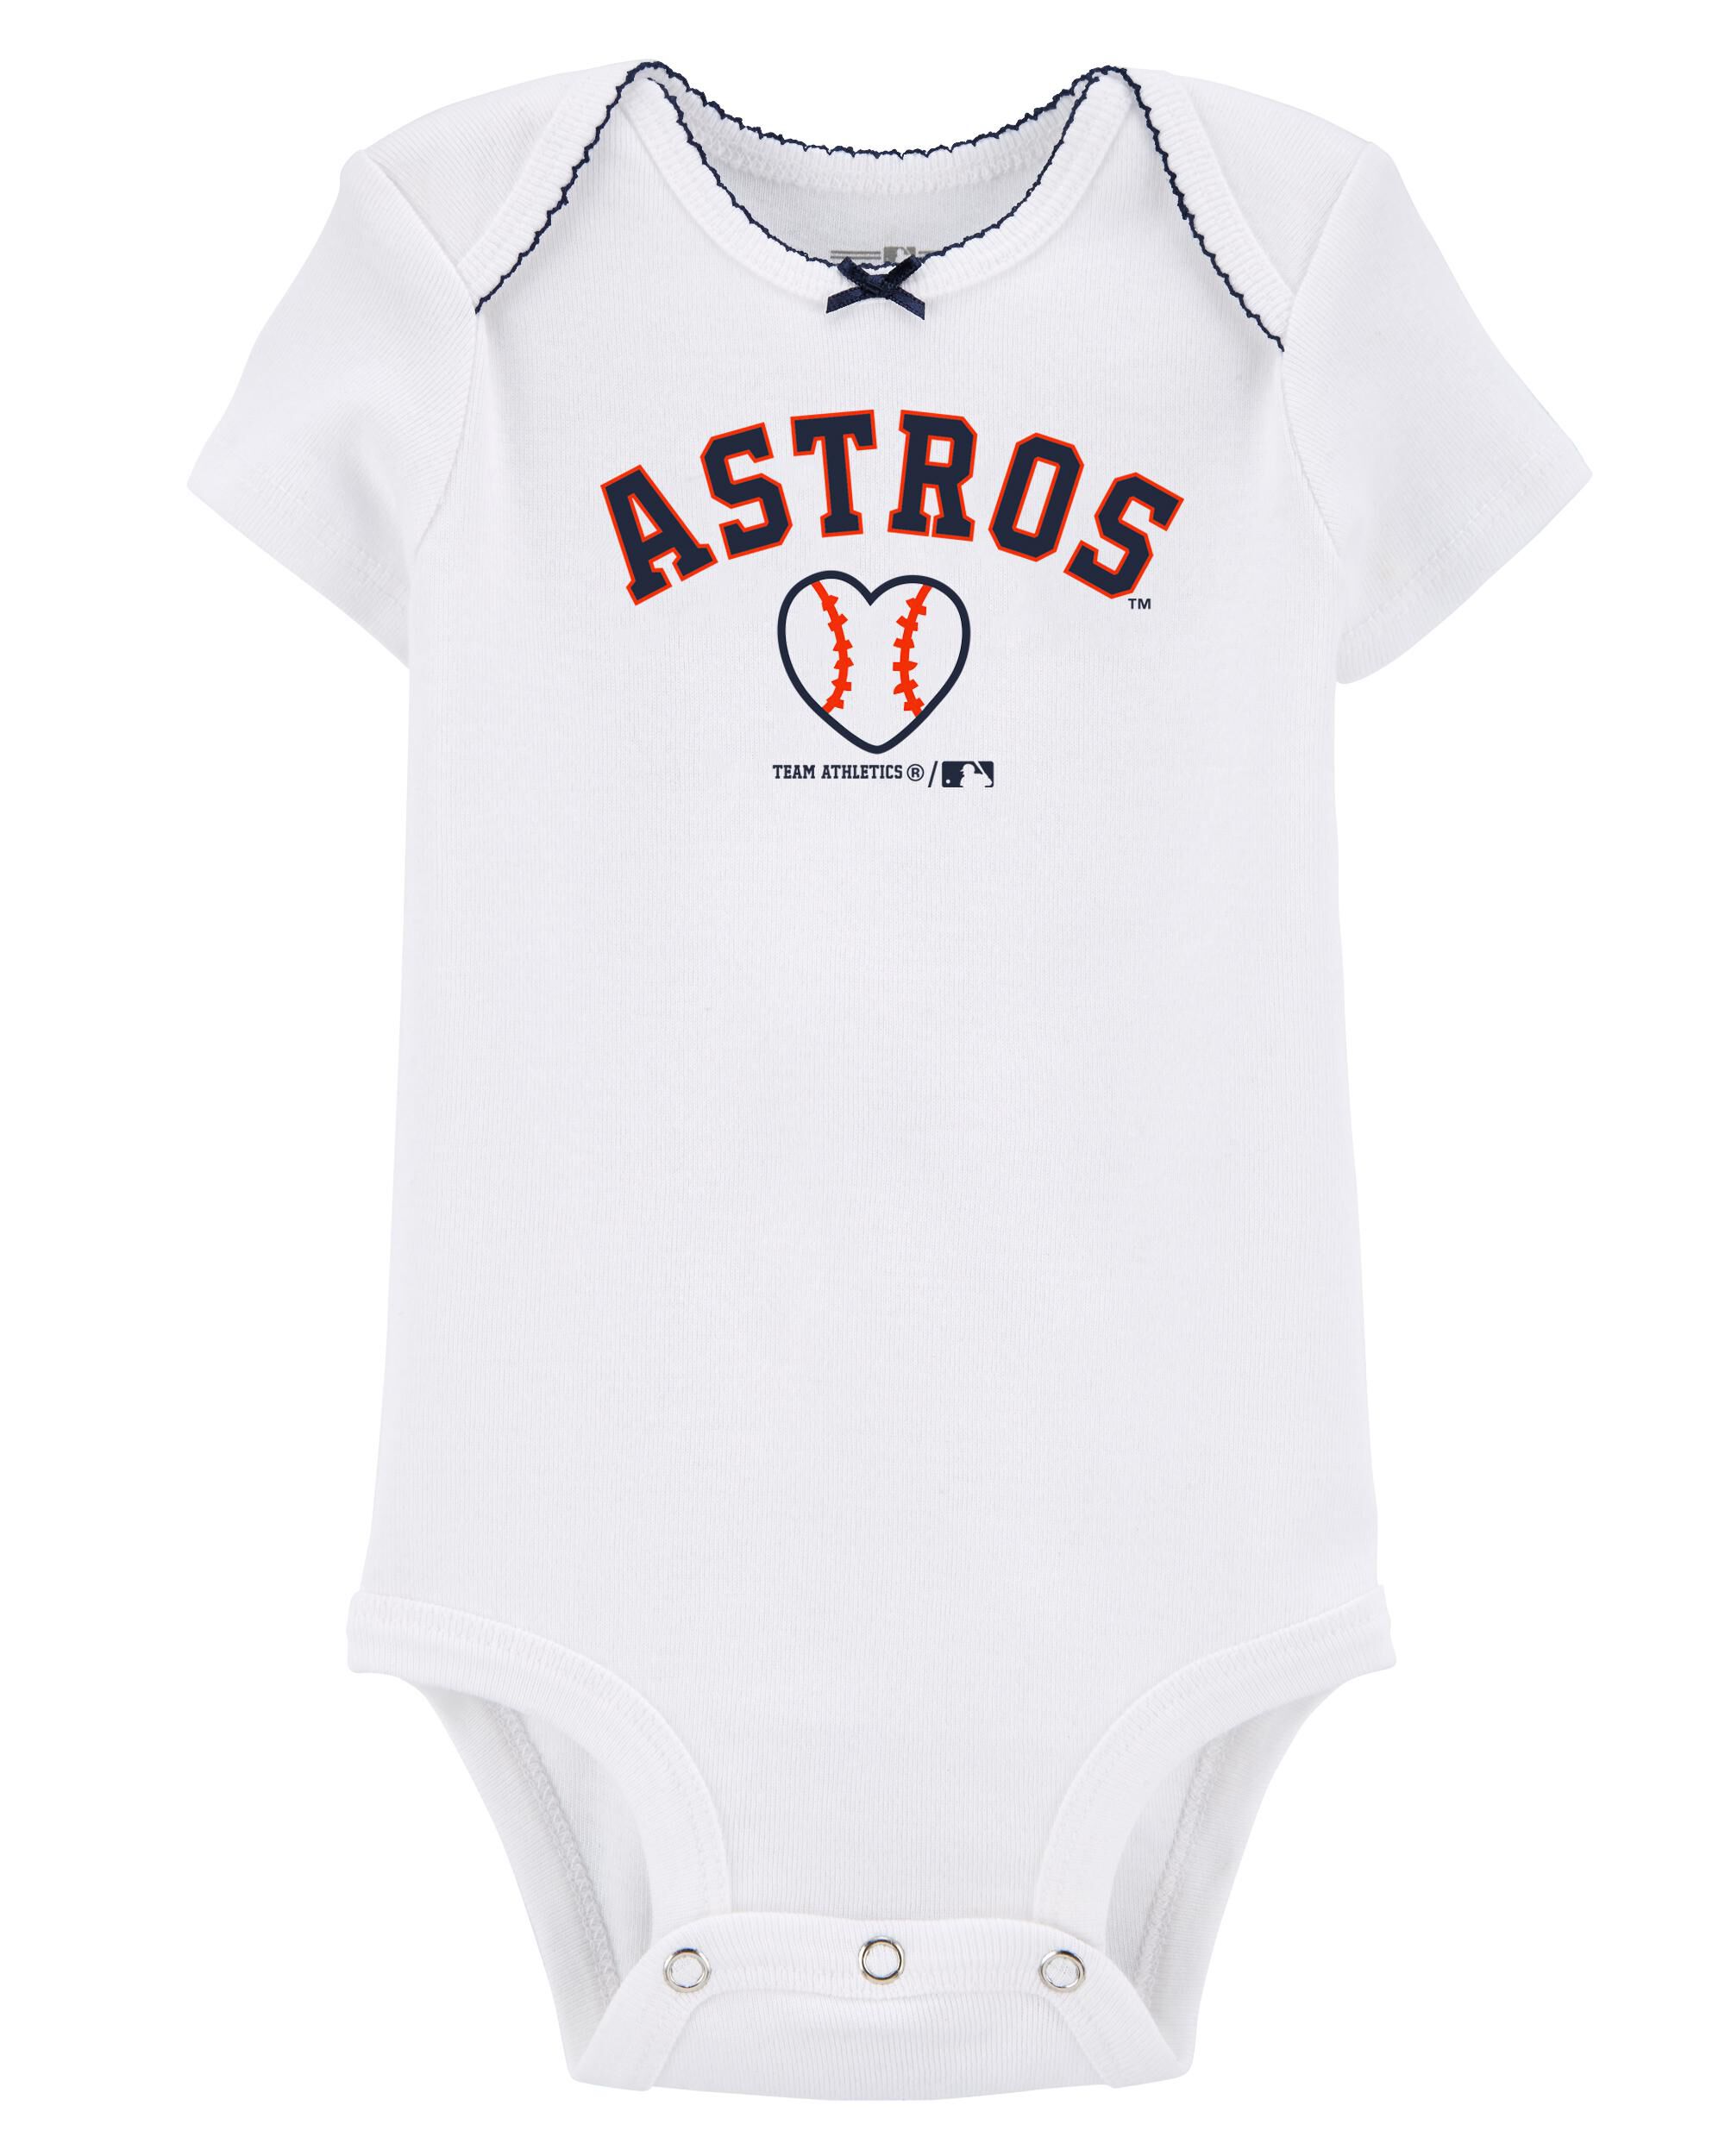 Carters Baby MLB Houston Astros Bodysuit